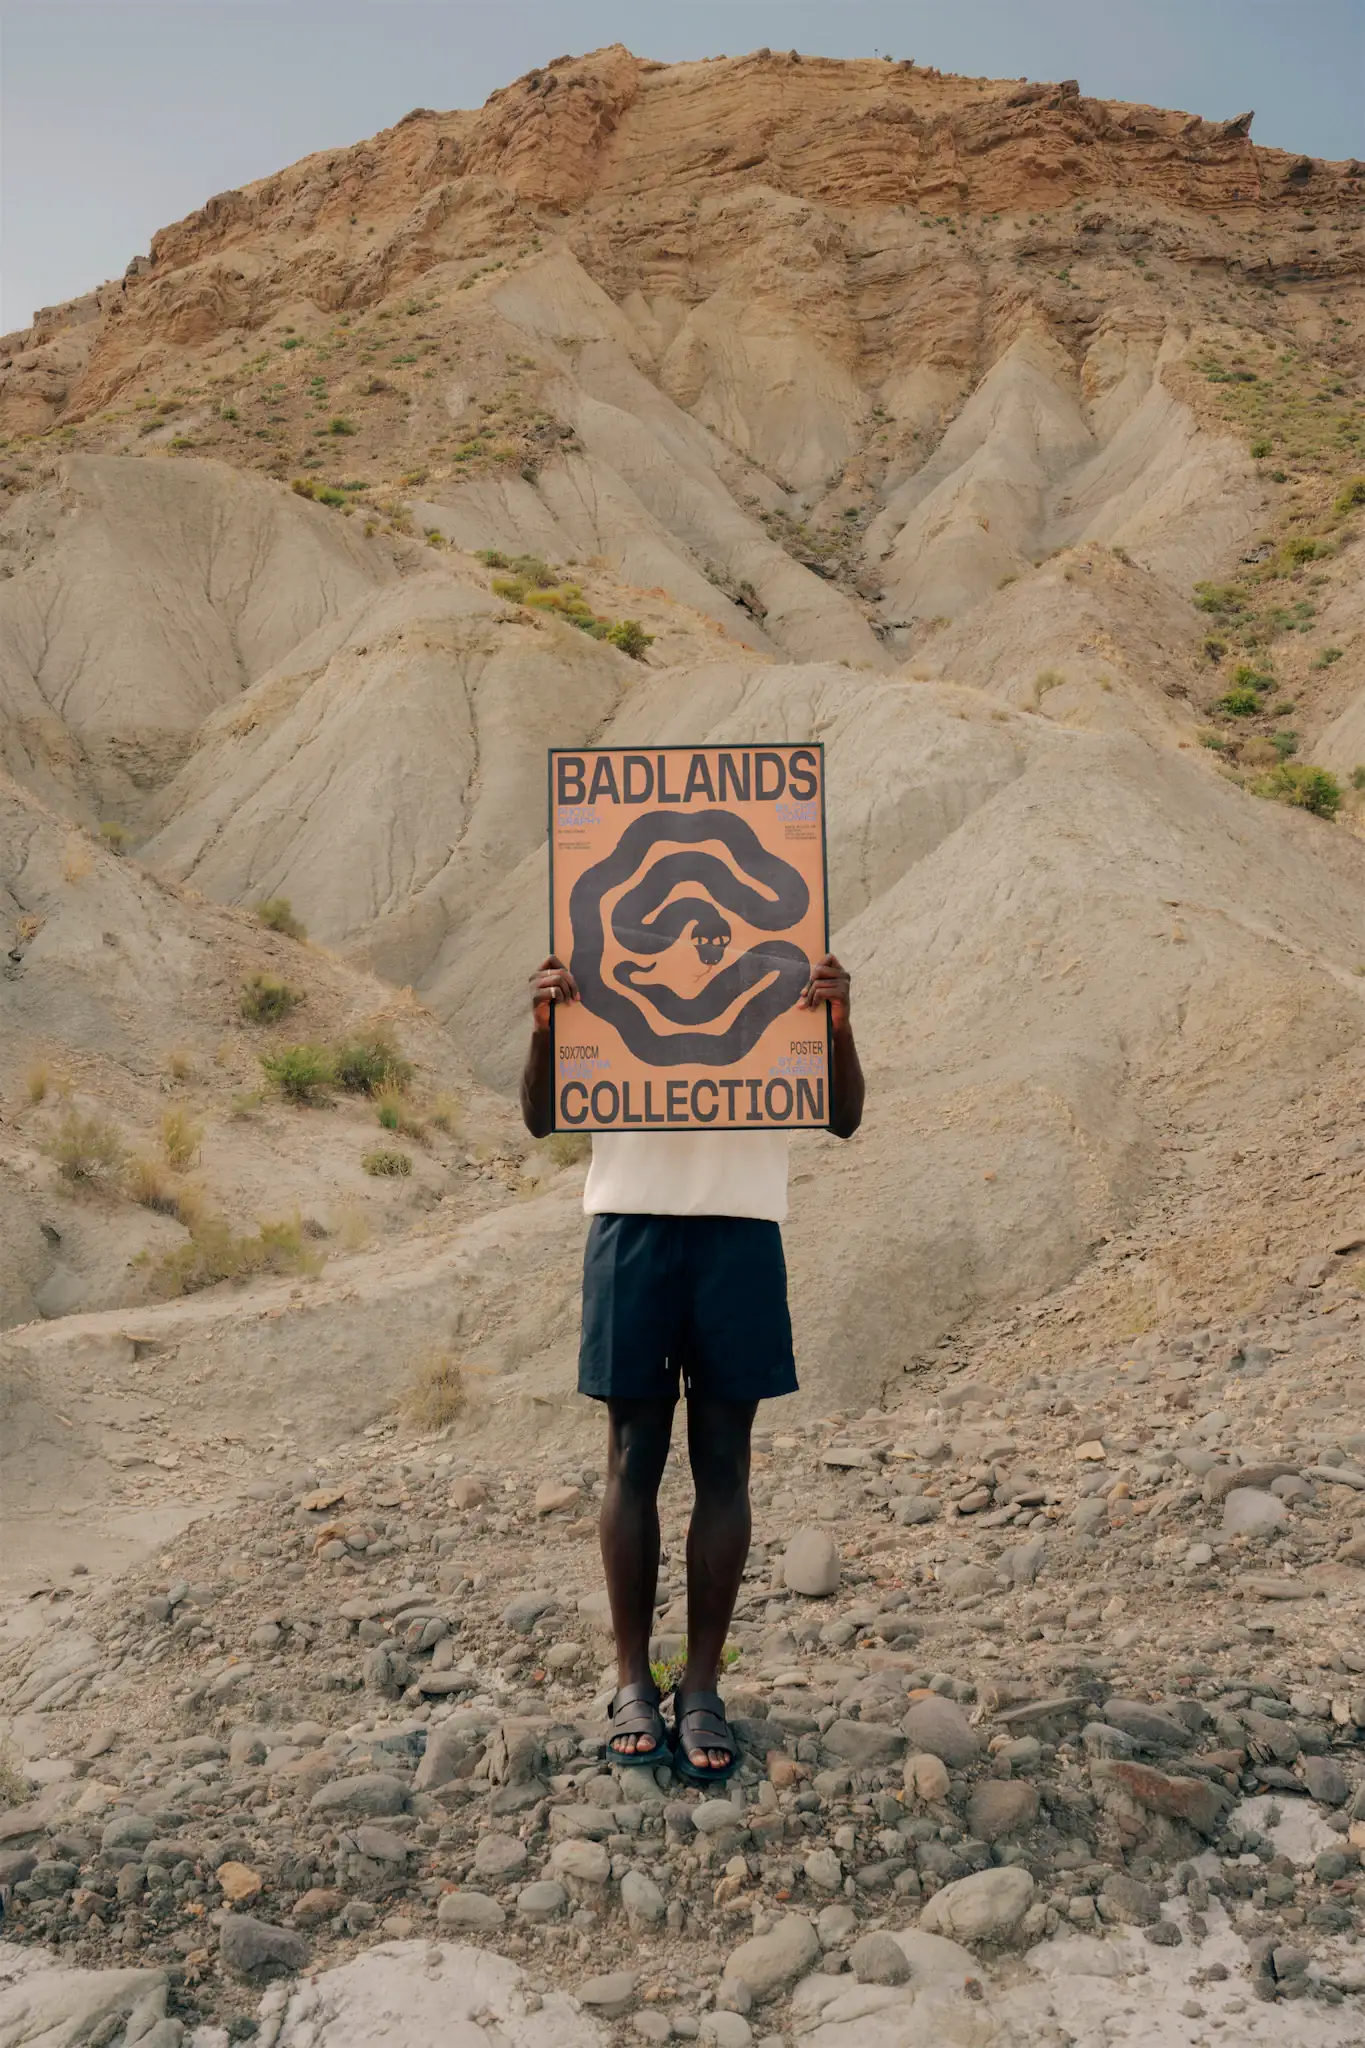 Black guy holding a framed poster mock-up in a desert environment